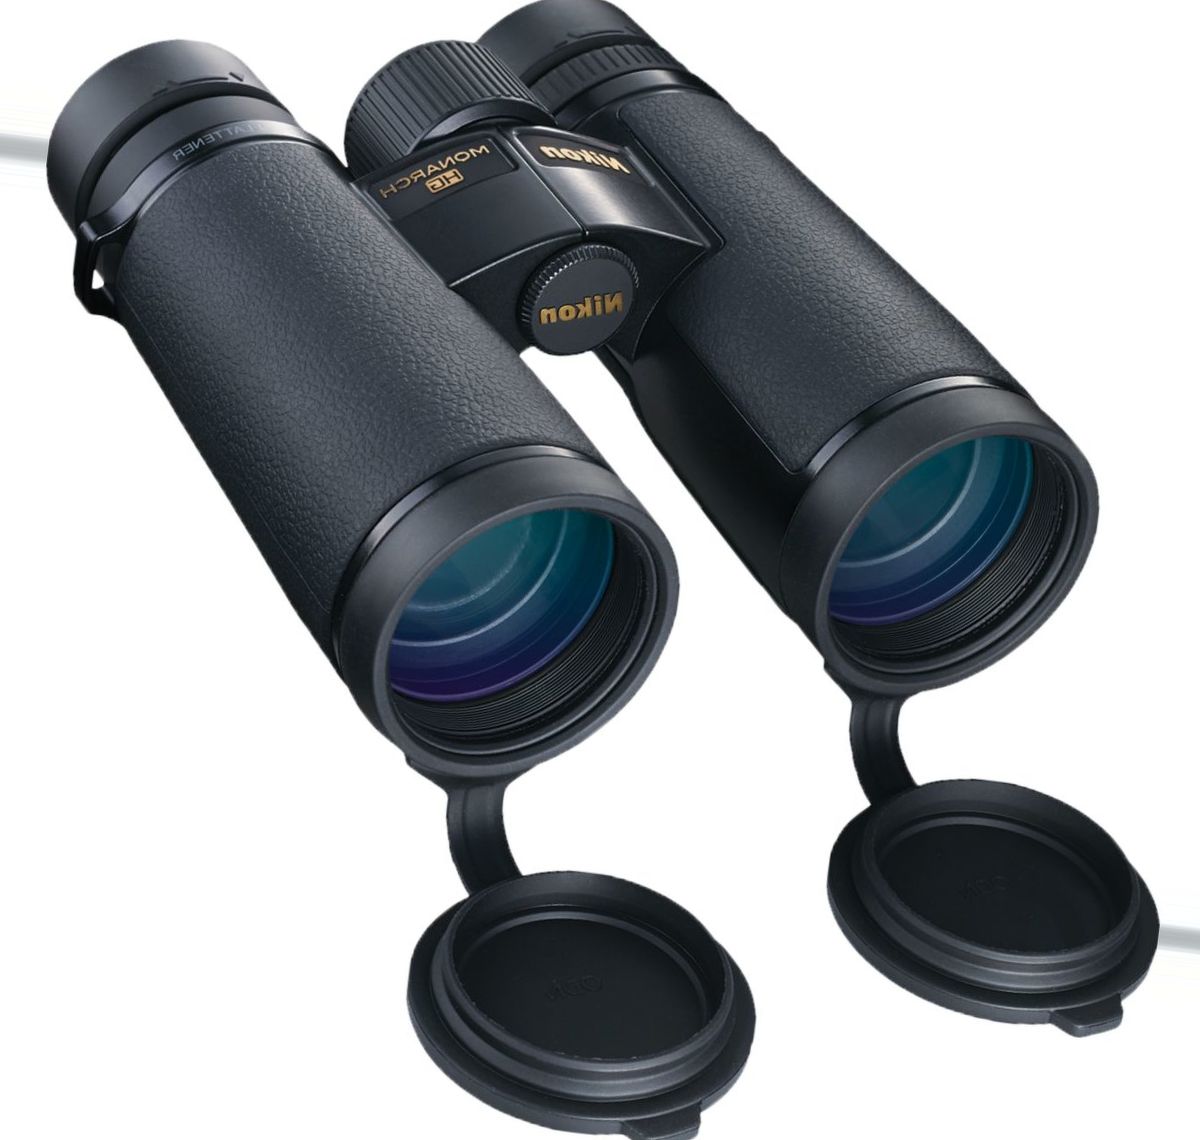 Nikon MONARCH HG 8x42 Binoculars